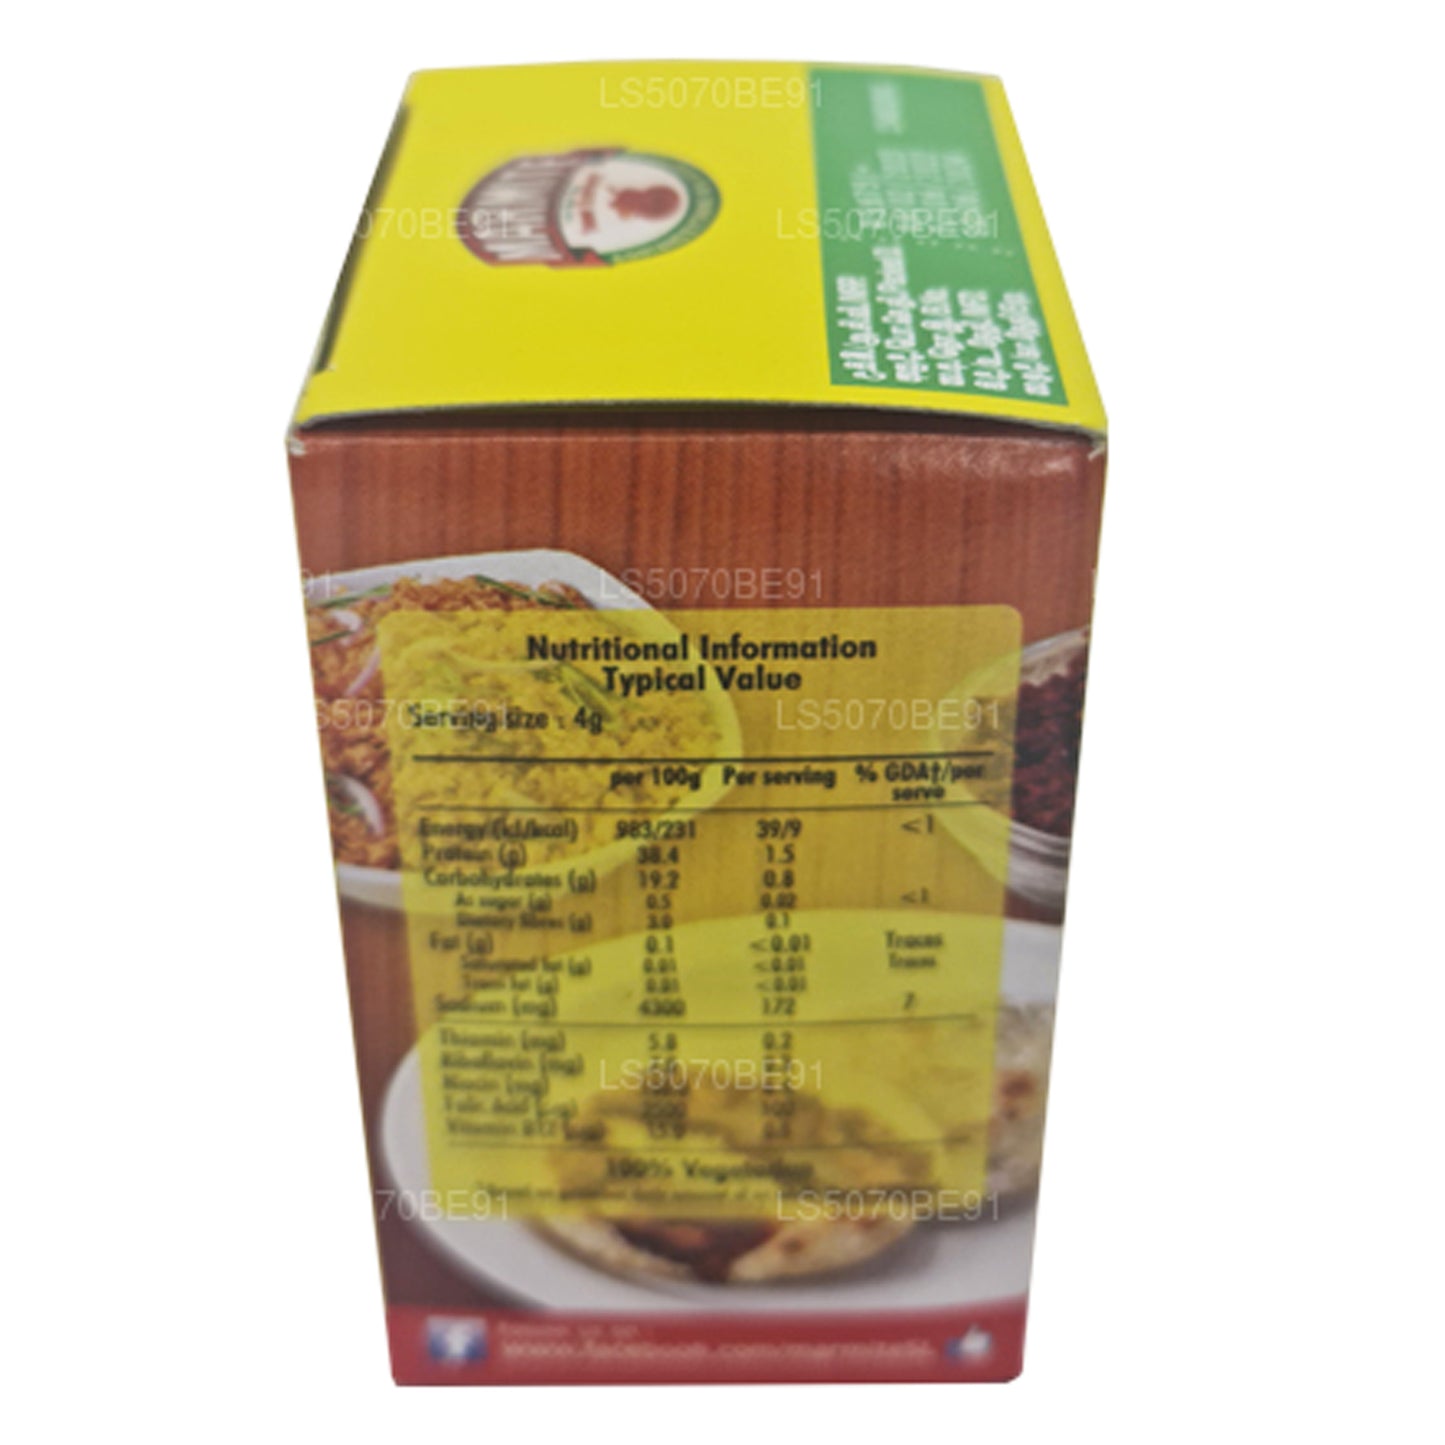 Marmite-Hefeextrakt (100 g)